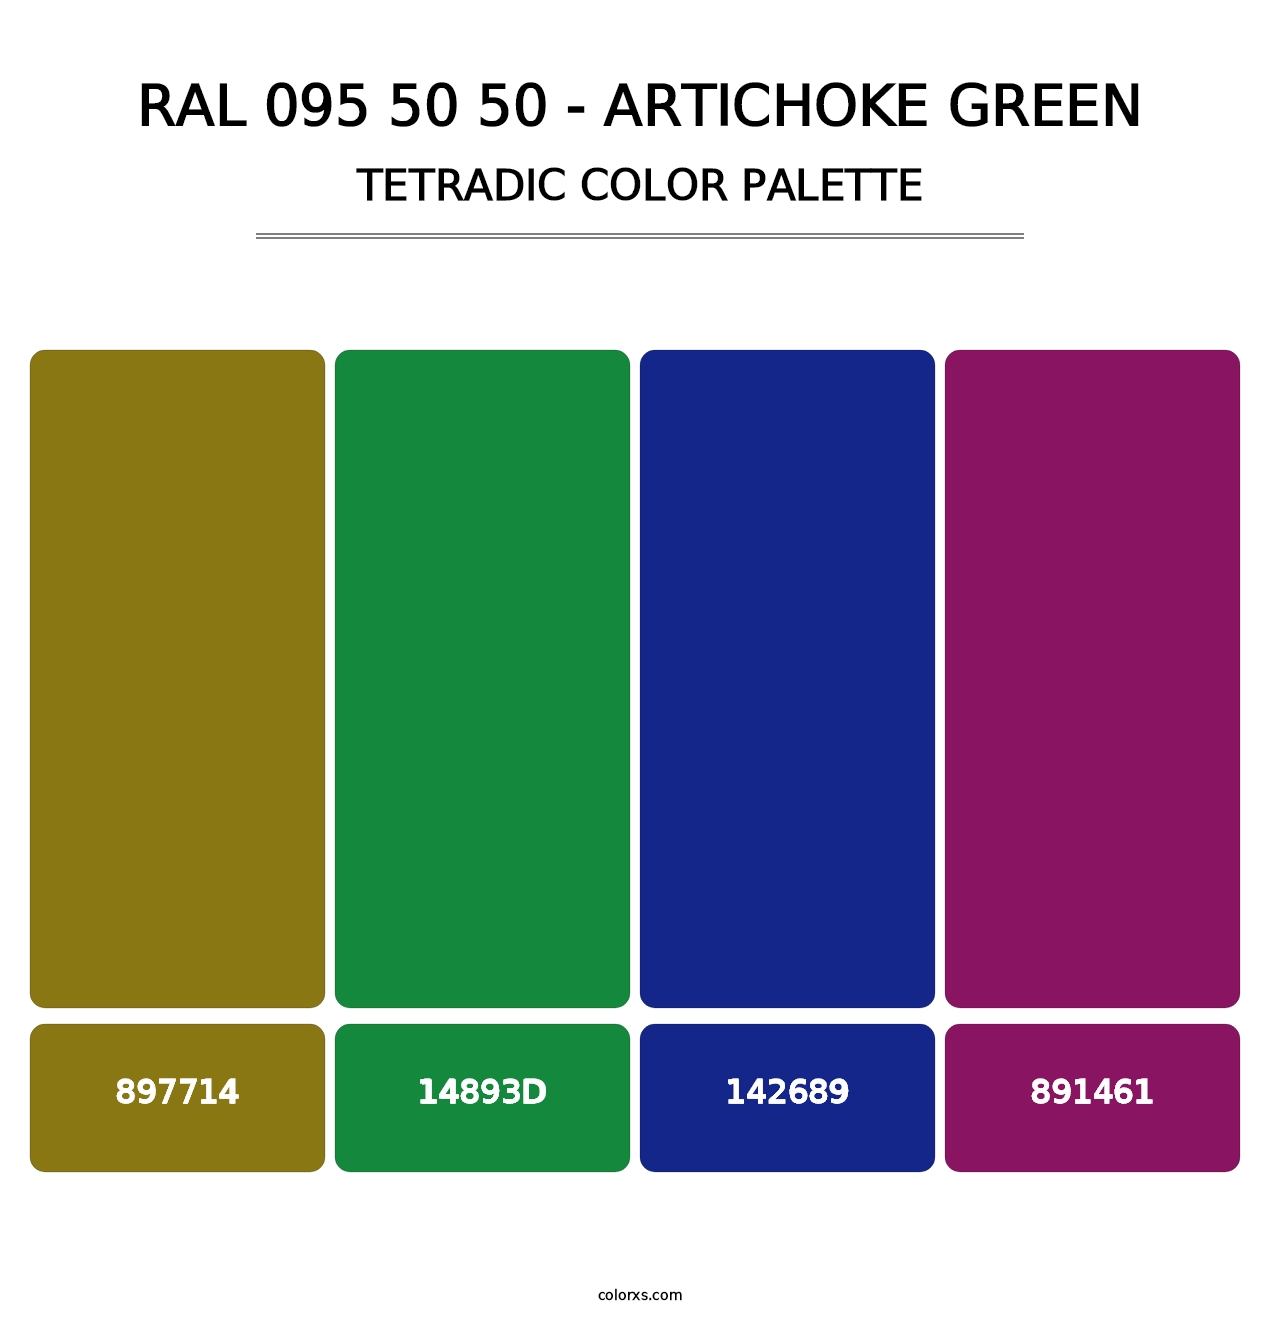 RAL 095 50 50 - Artichoke Green - Tetradic Color Palette